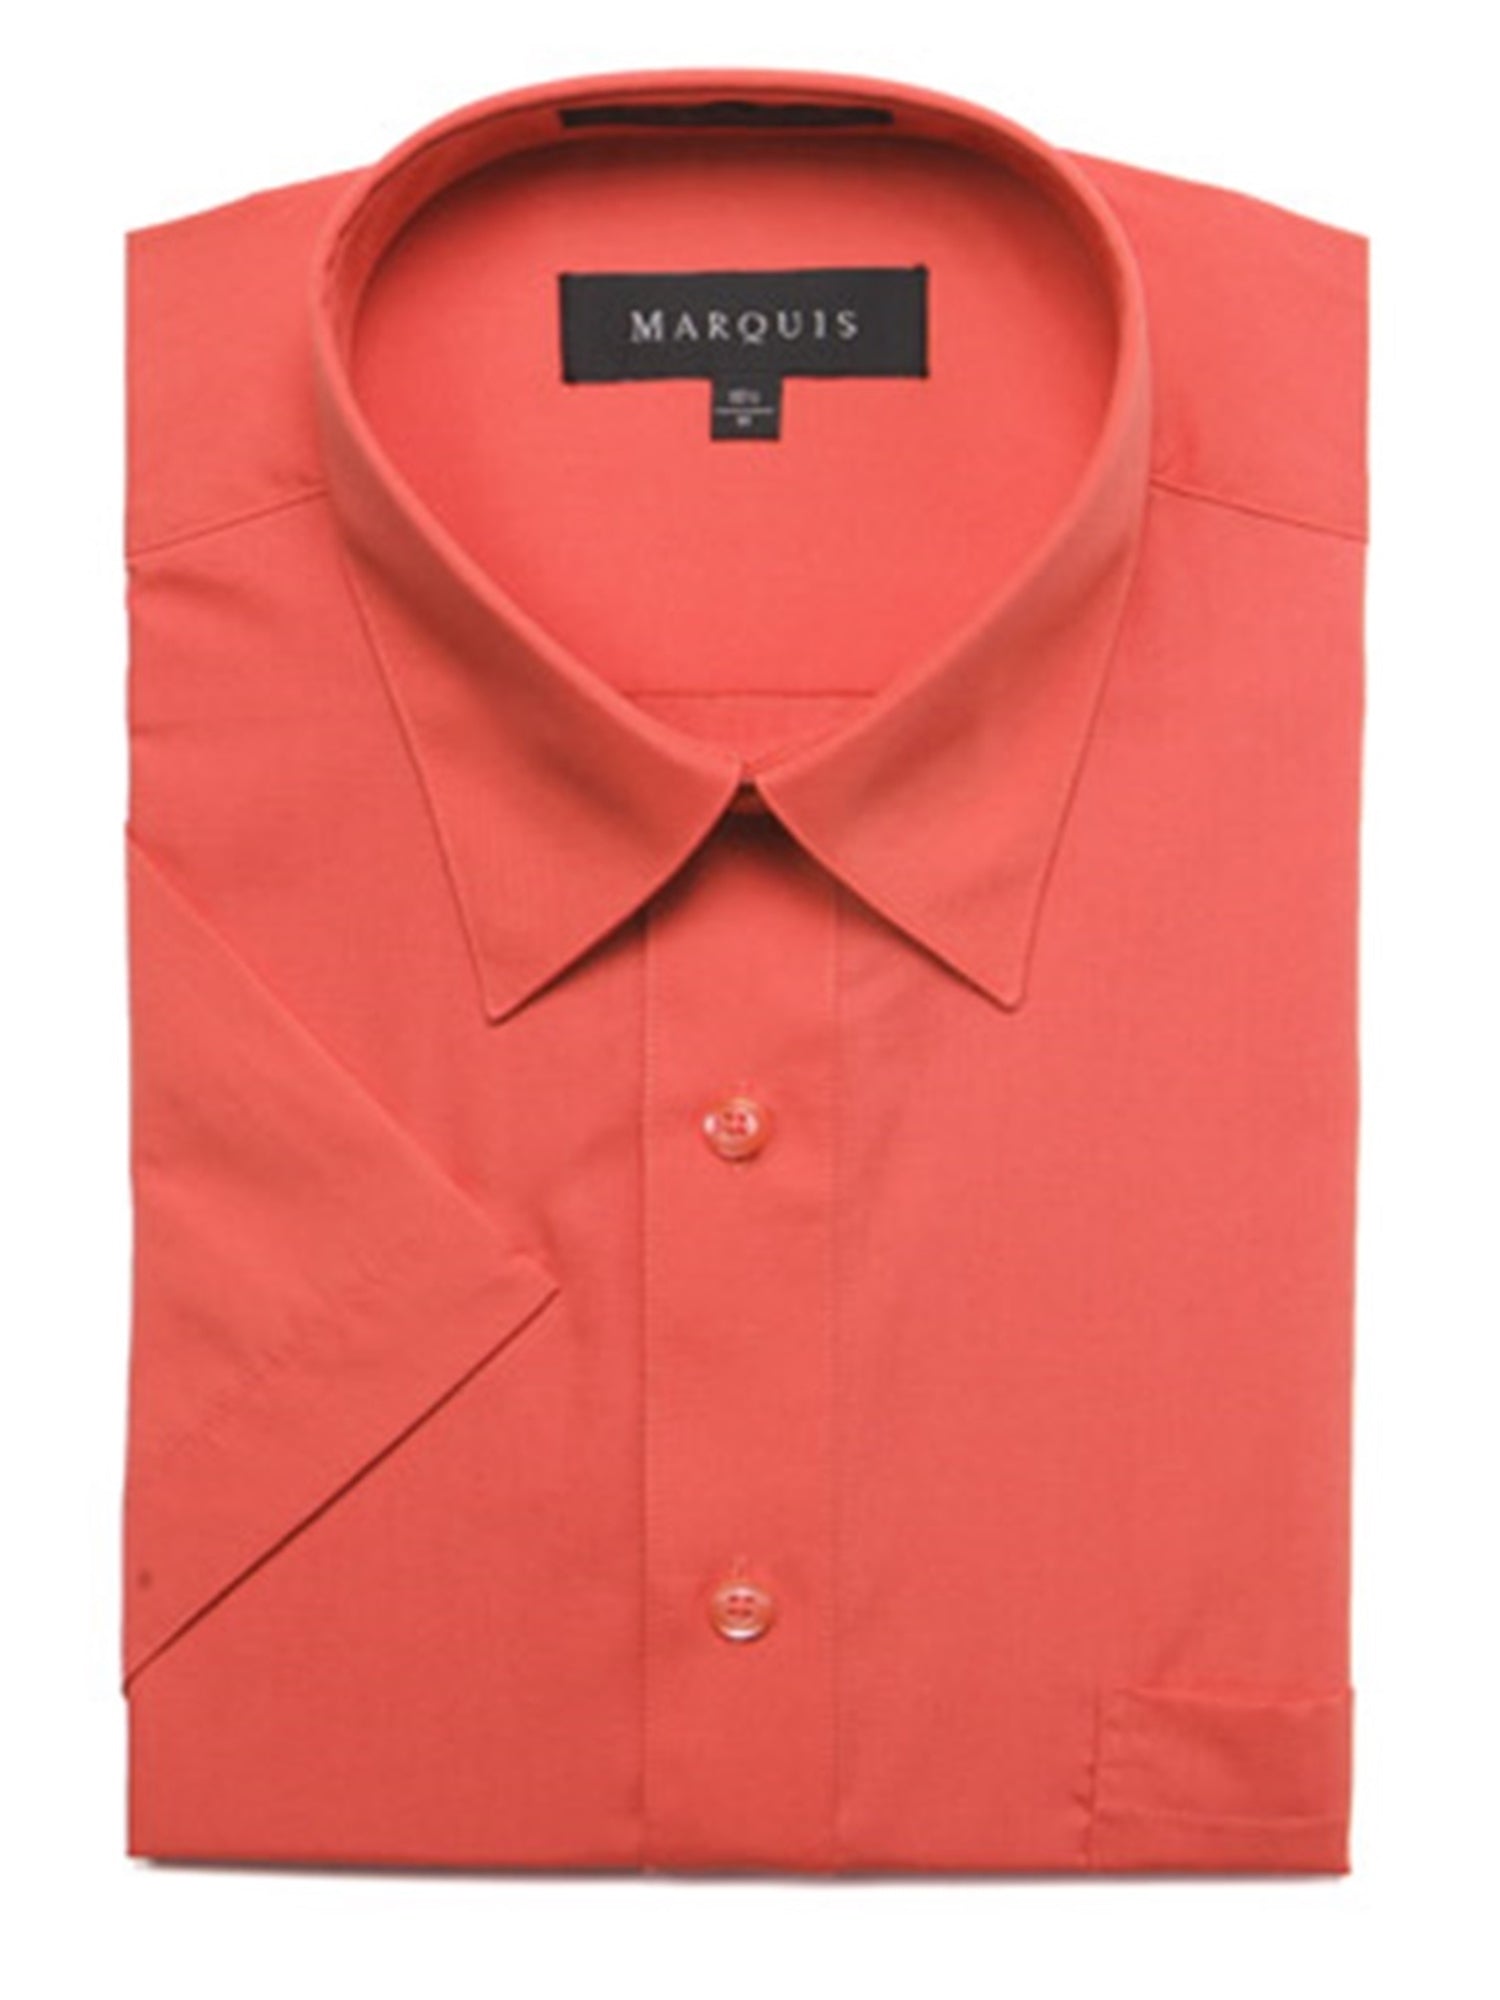 Marquis Men's Short Sleeve Regular Fit Dress Shirt - S To 4XL Men's Dress Shirts Marquis Smoked Salmon Small/14.5 